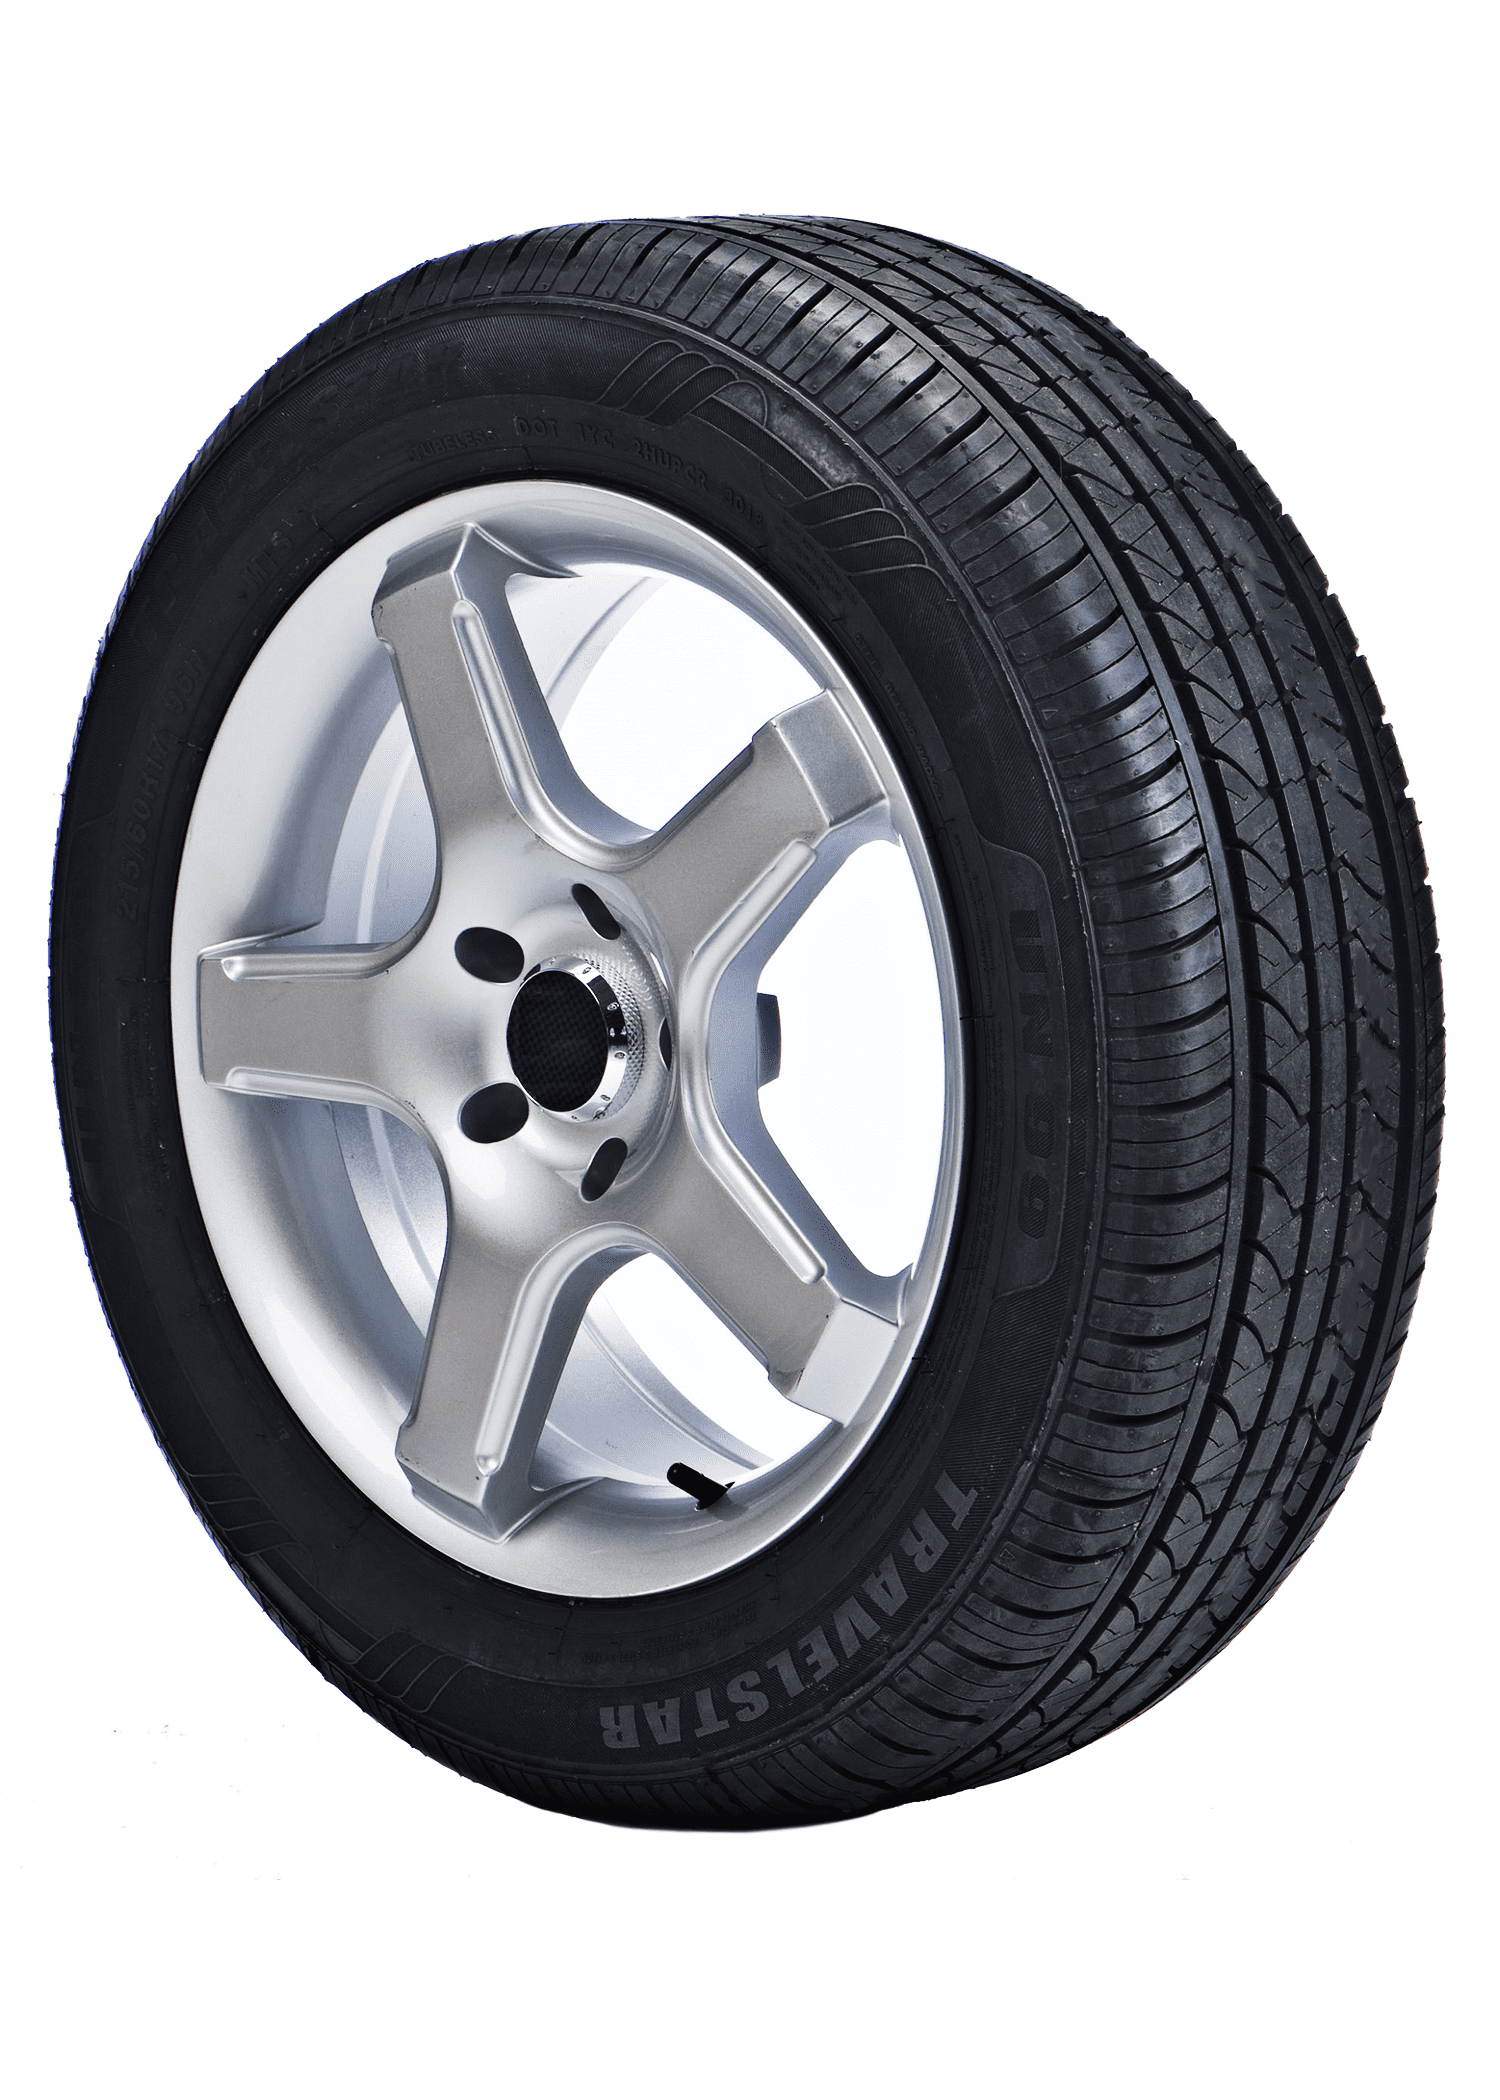 XL Tire Plus Performance 2019-21 One New Fits: Pro Crosstrek Jeep 2018-23 Latitude Cherokee Quatrac A/S Subaru 225/60R17 Convenience, 103V Vredestein